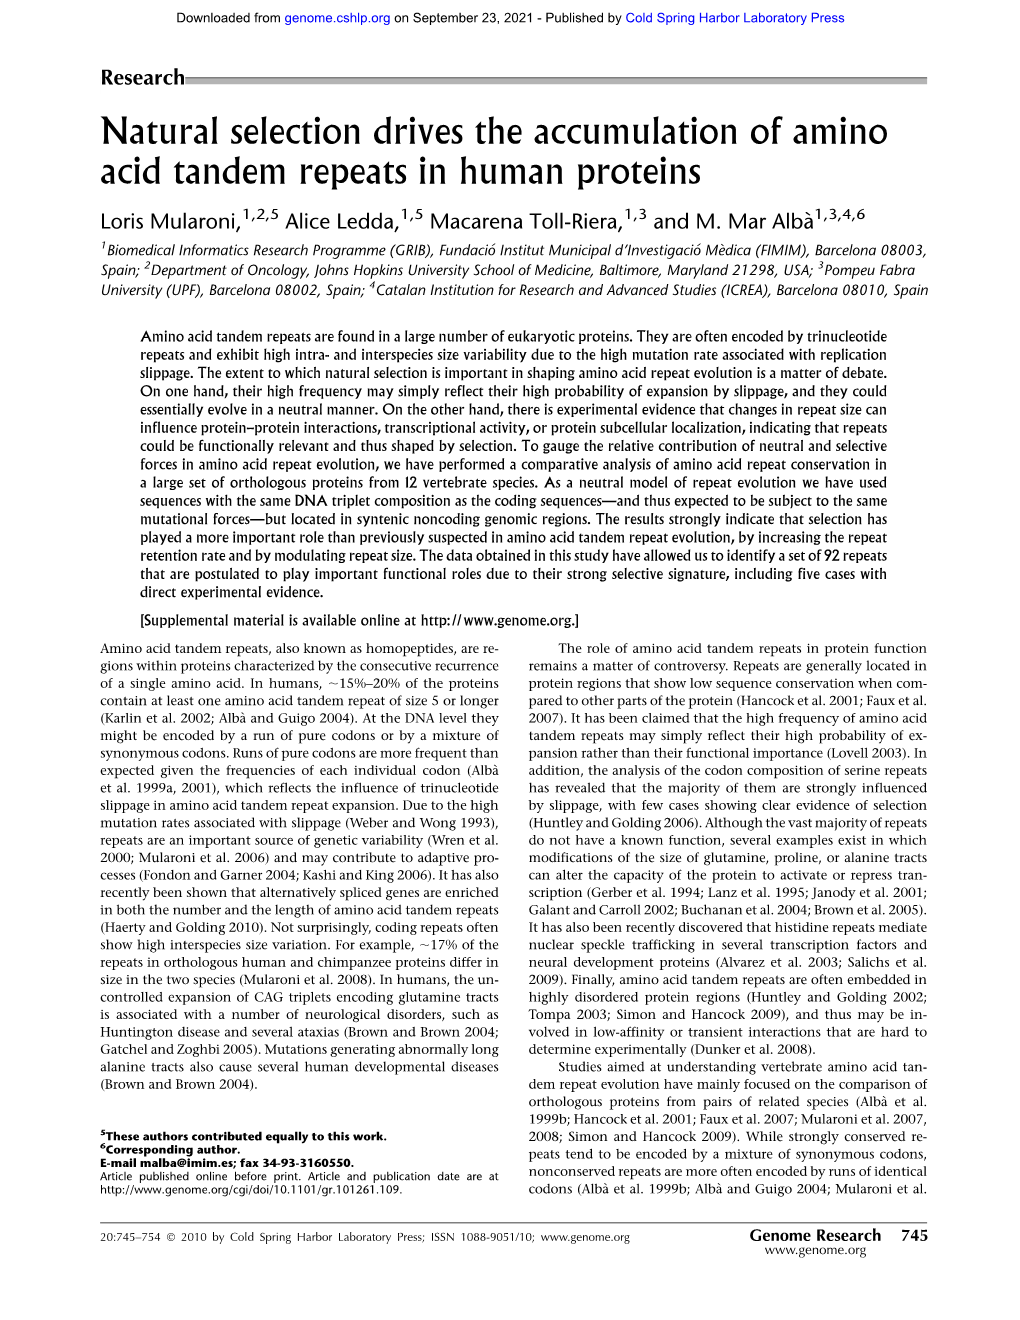 Natural Selection Drives the Accumulation of Amino Acid Tandem Repeats in Human Proteins